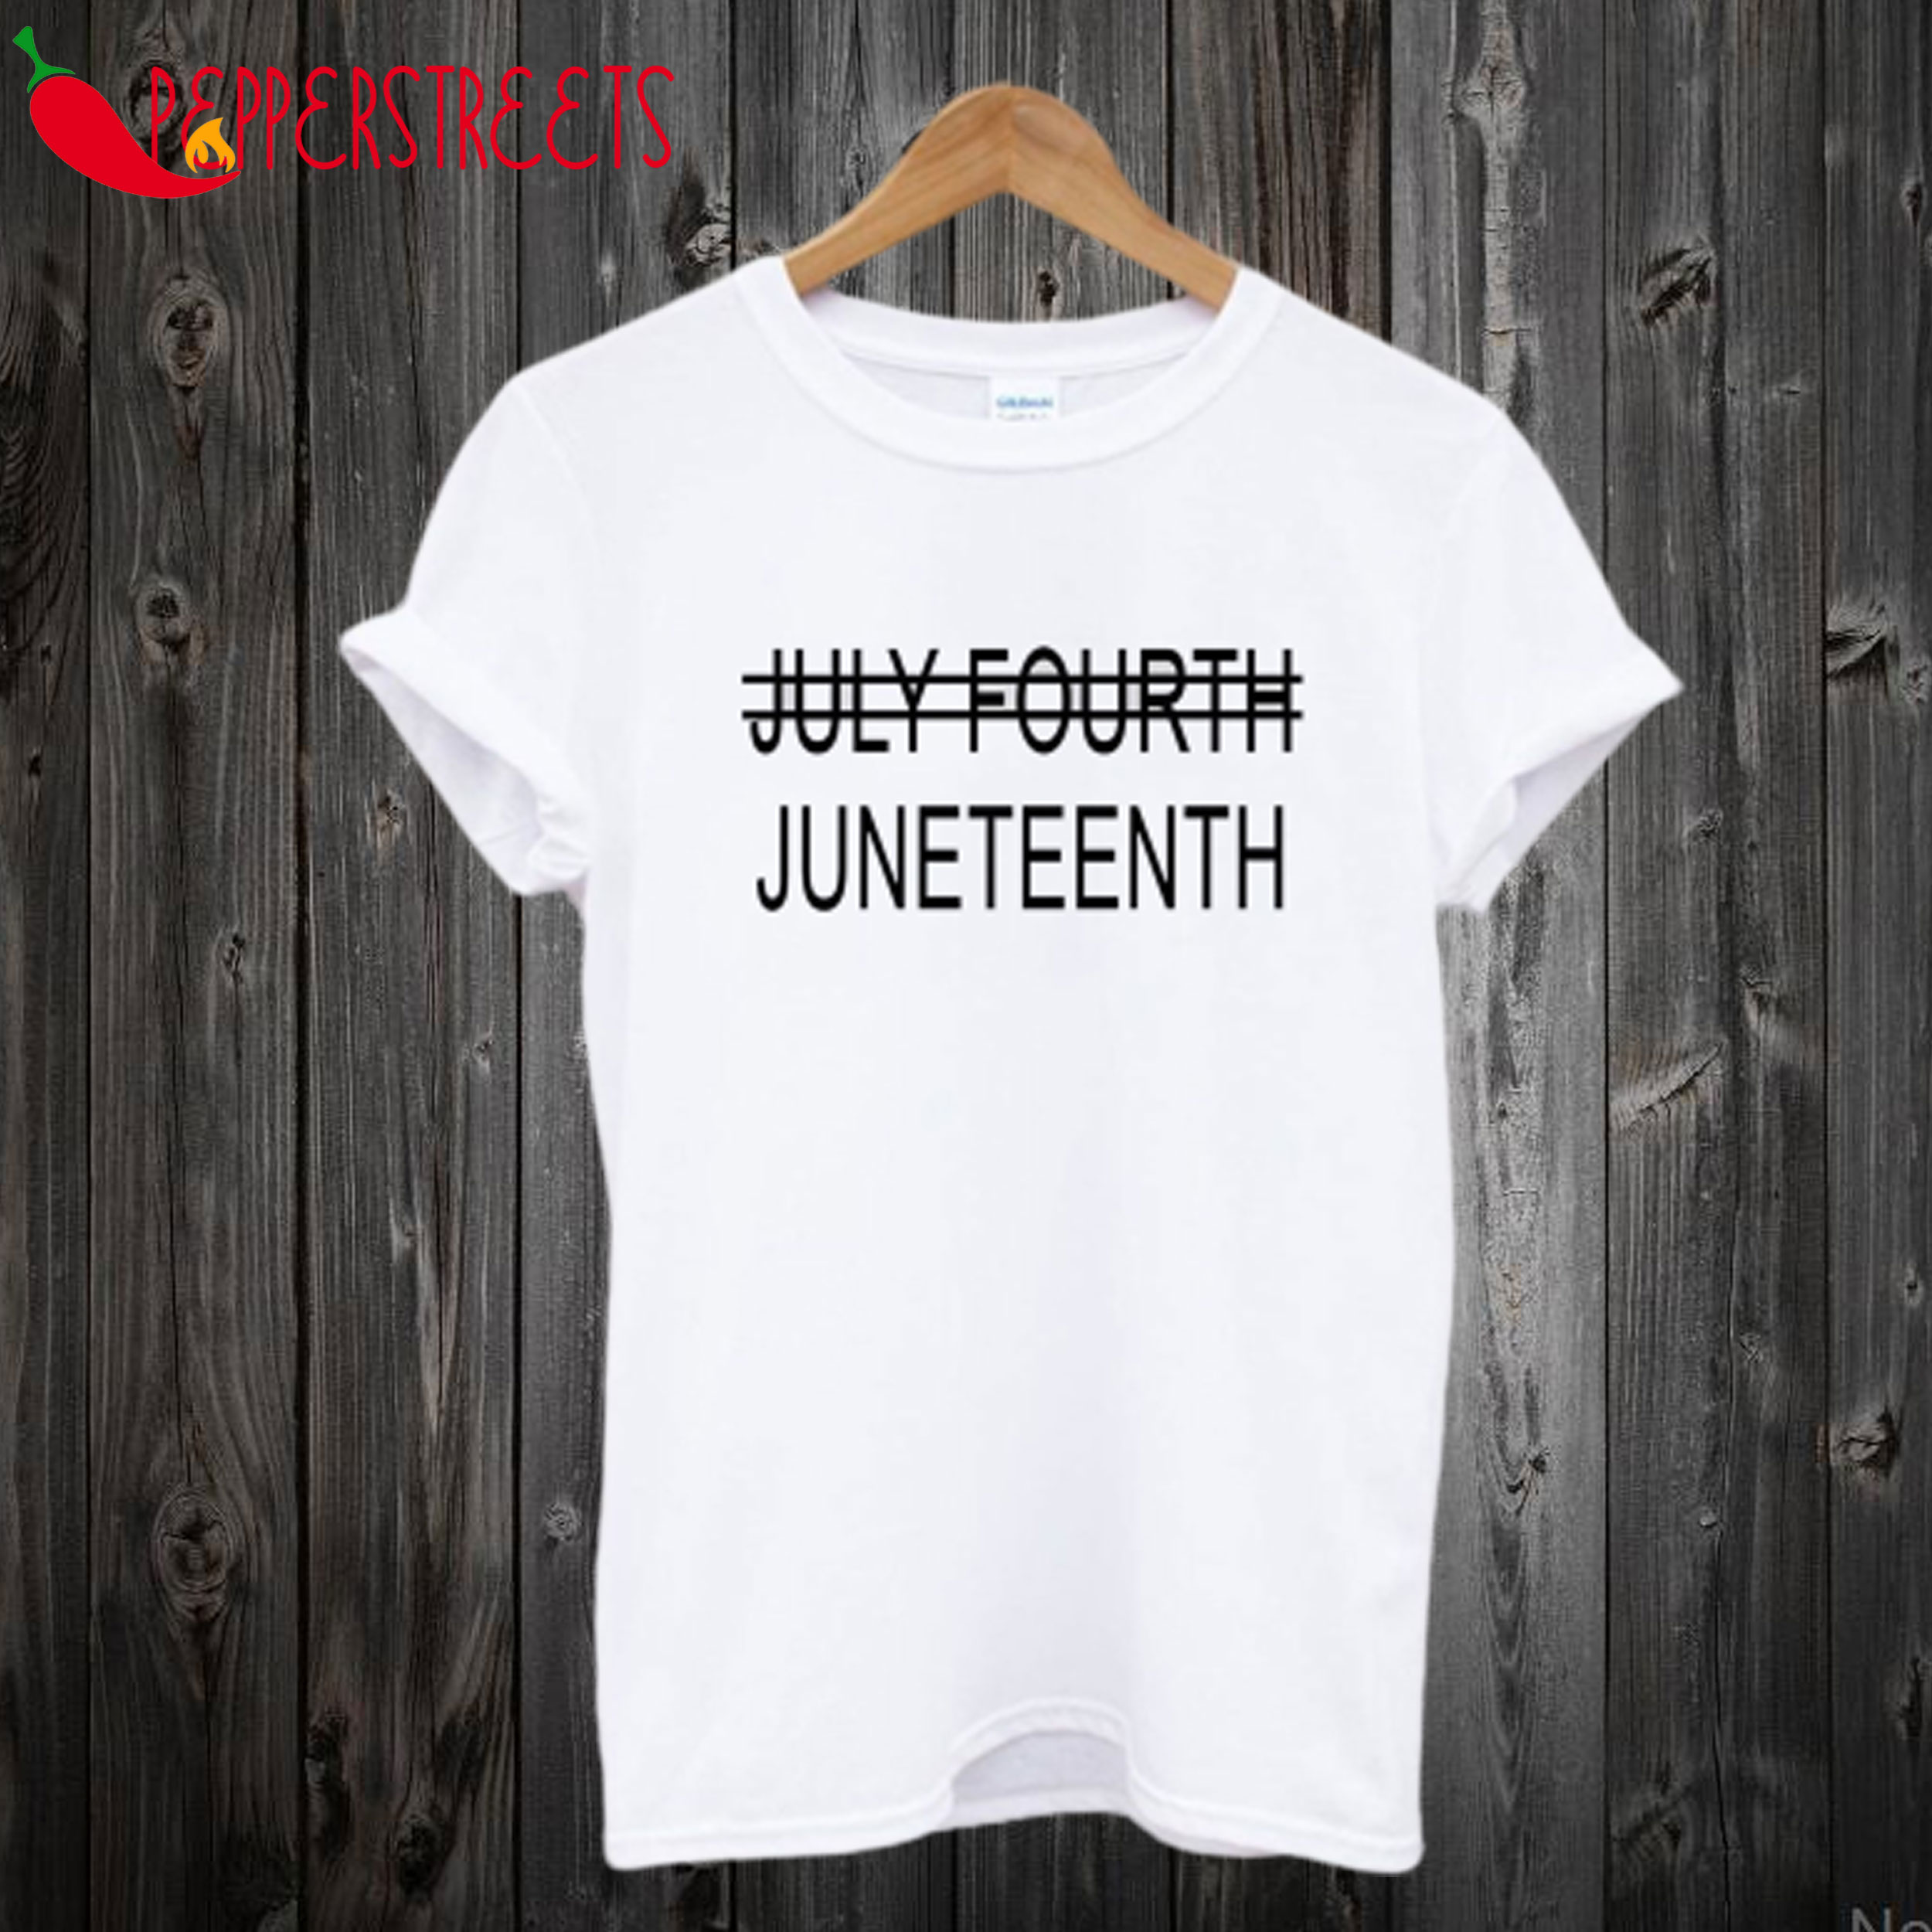 Juneteenth July Fourth T shirt